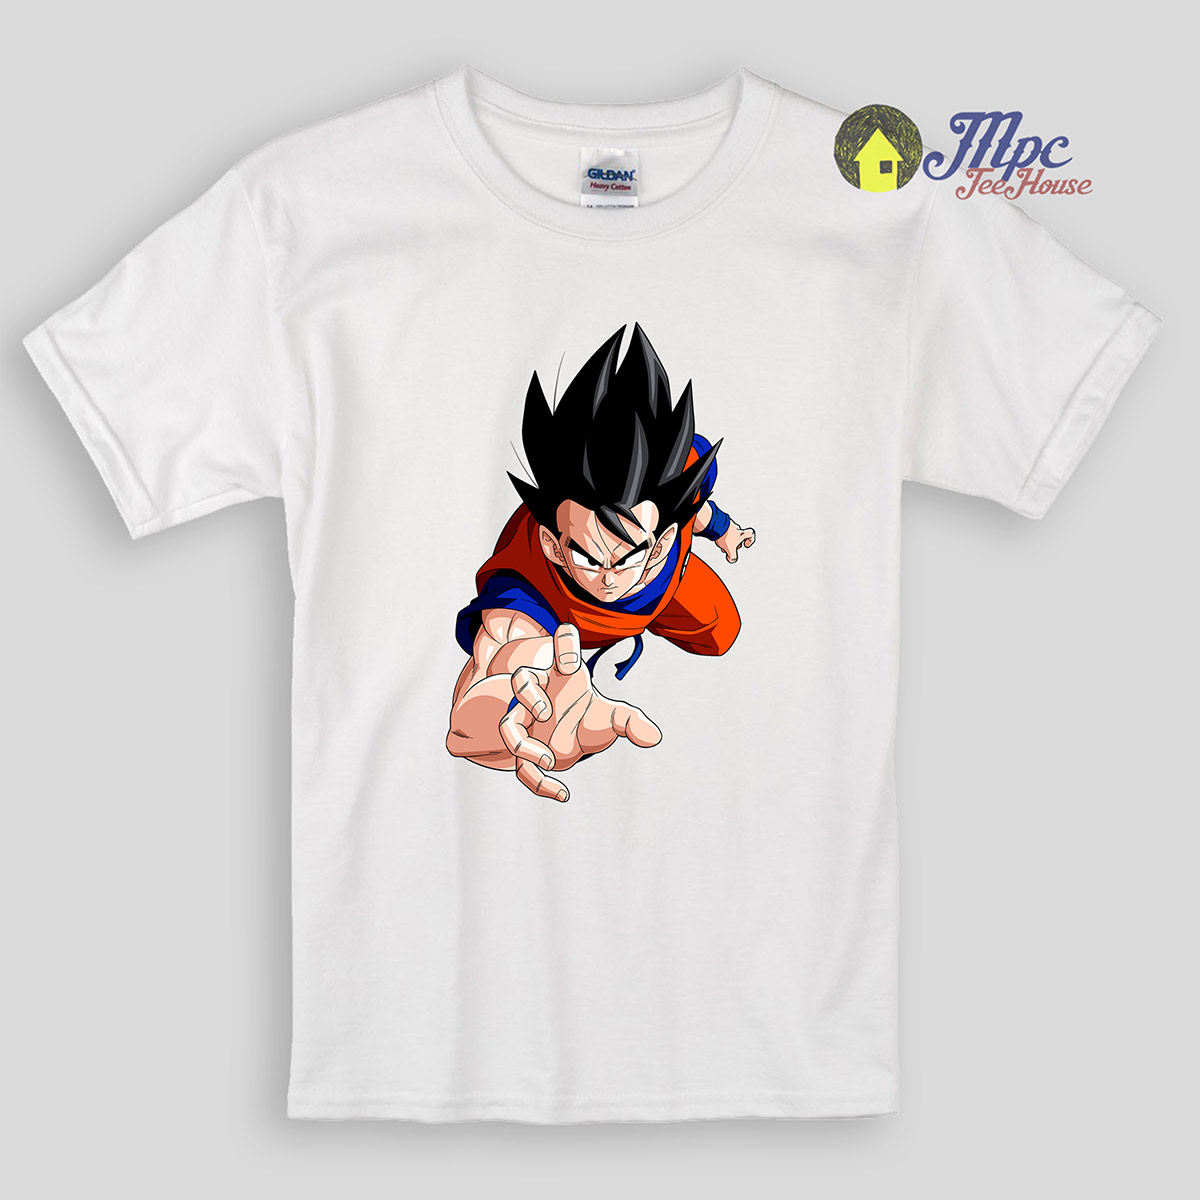 Dragon ball z t-shirt goku kid tee,100% preshrunk cotton,Condition:: New wi...